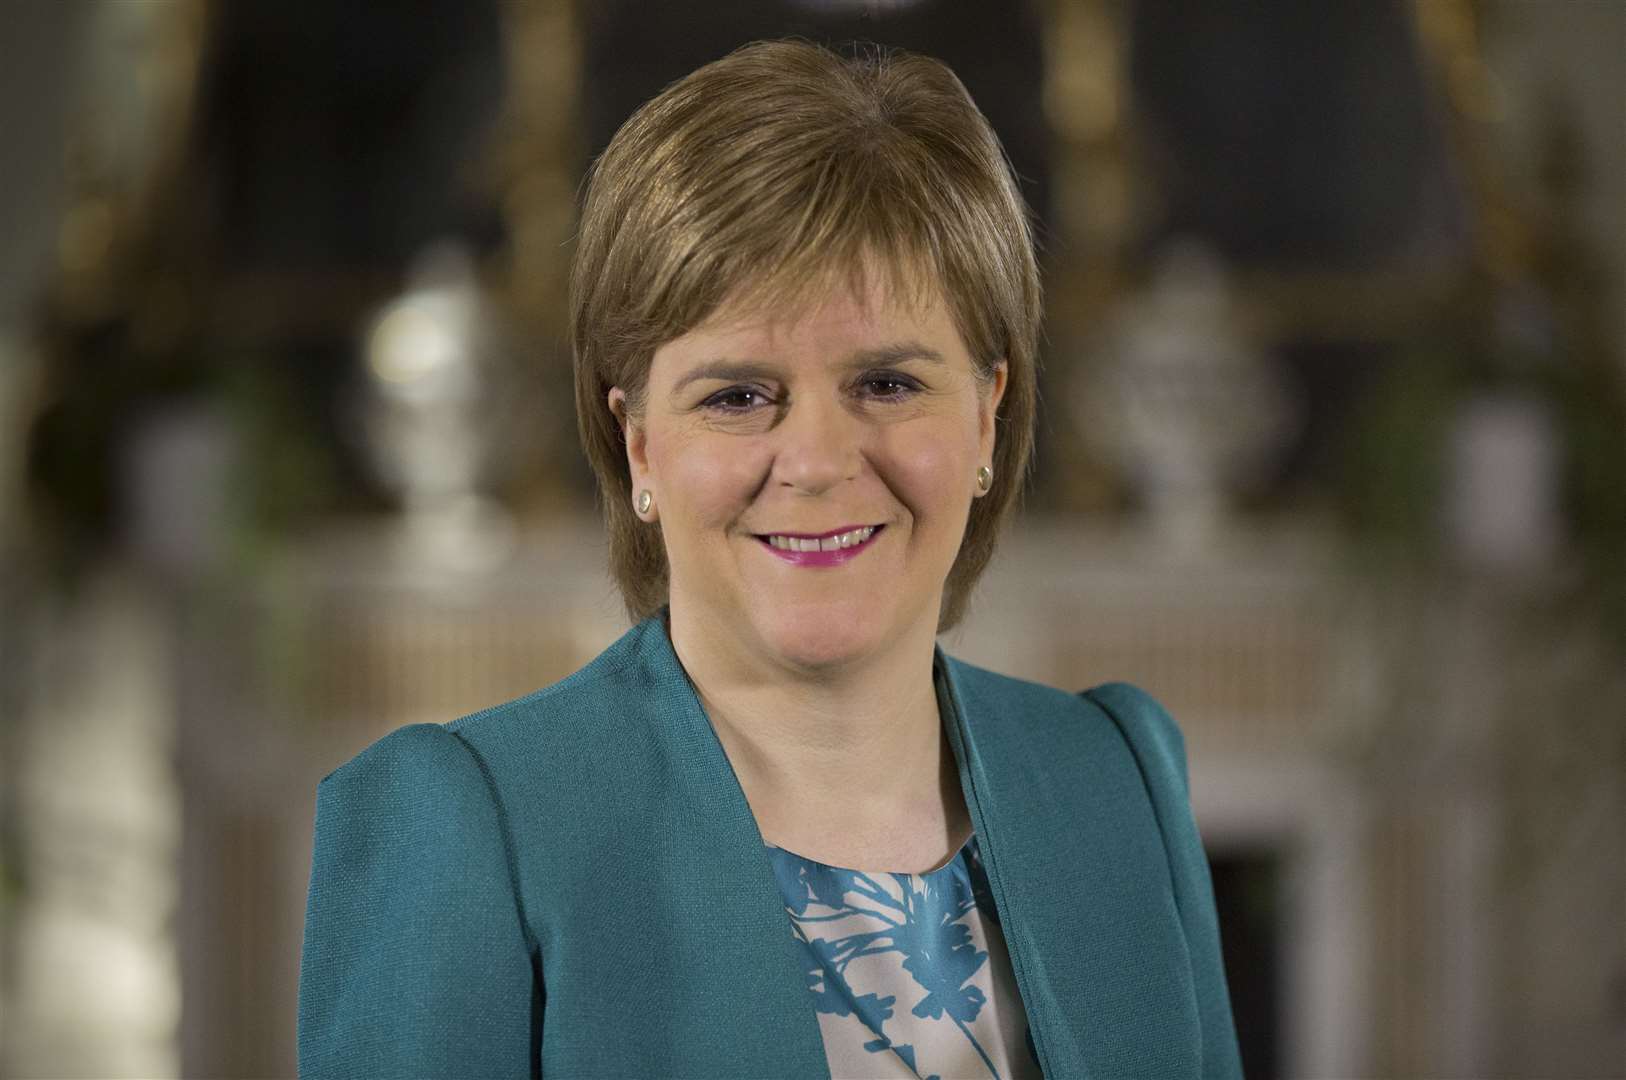 Nicola Sturgeon announced the fund to help Scotland transition to net-zero.